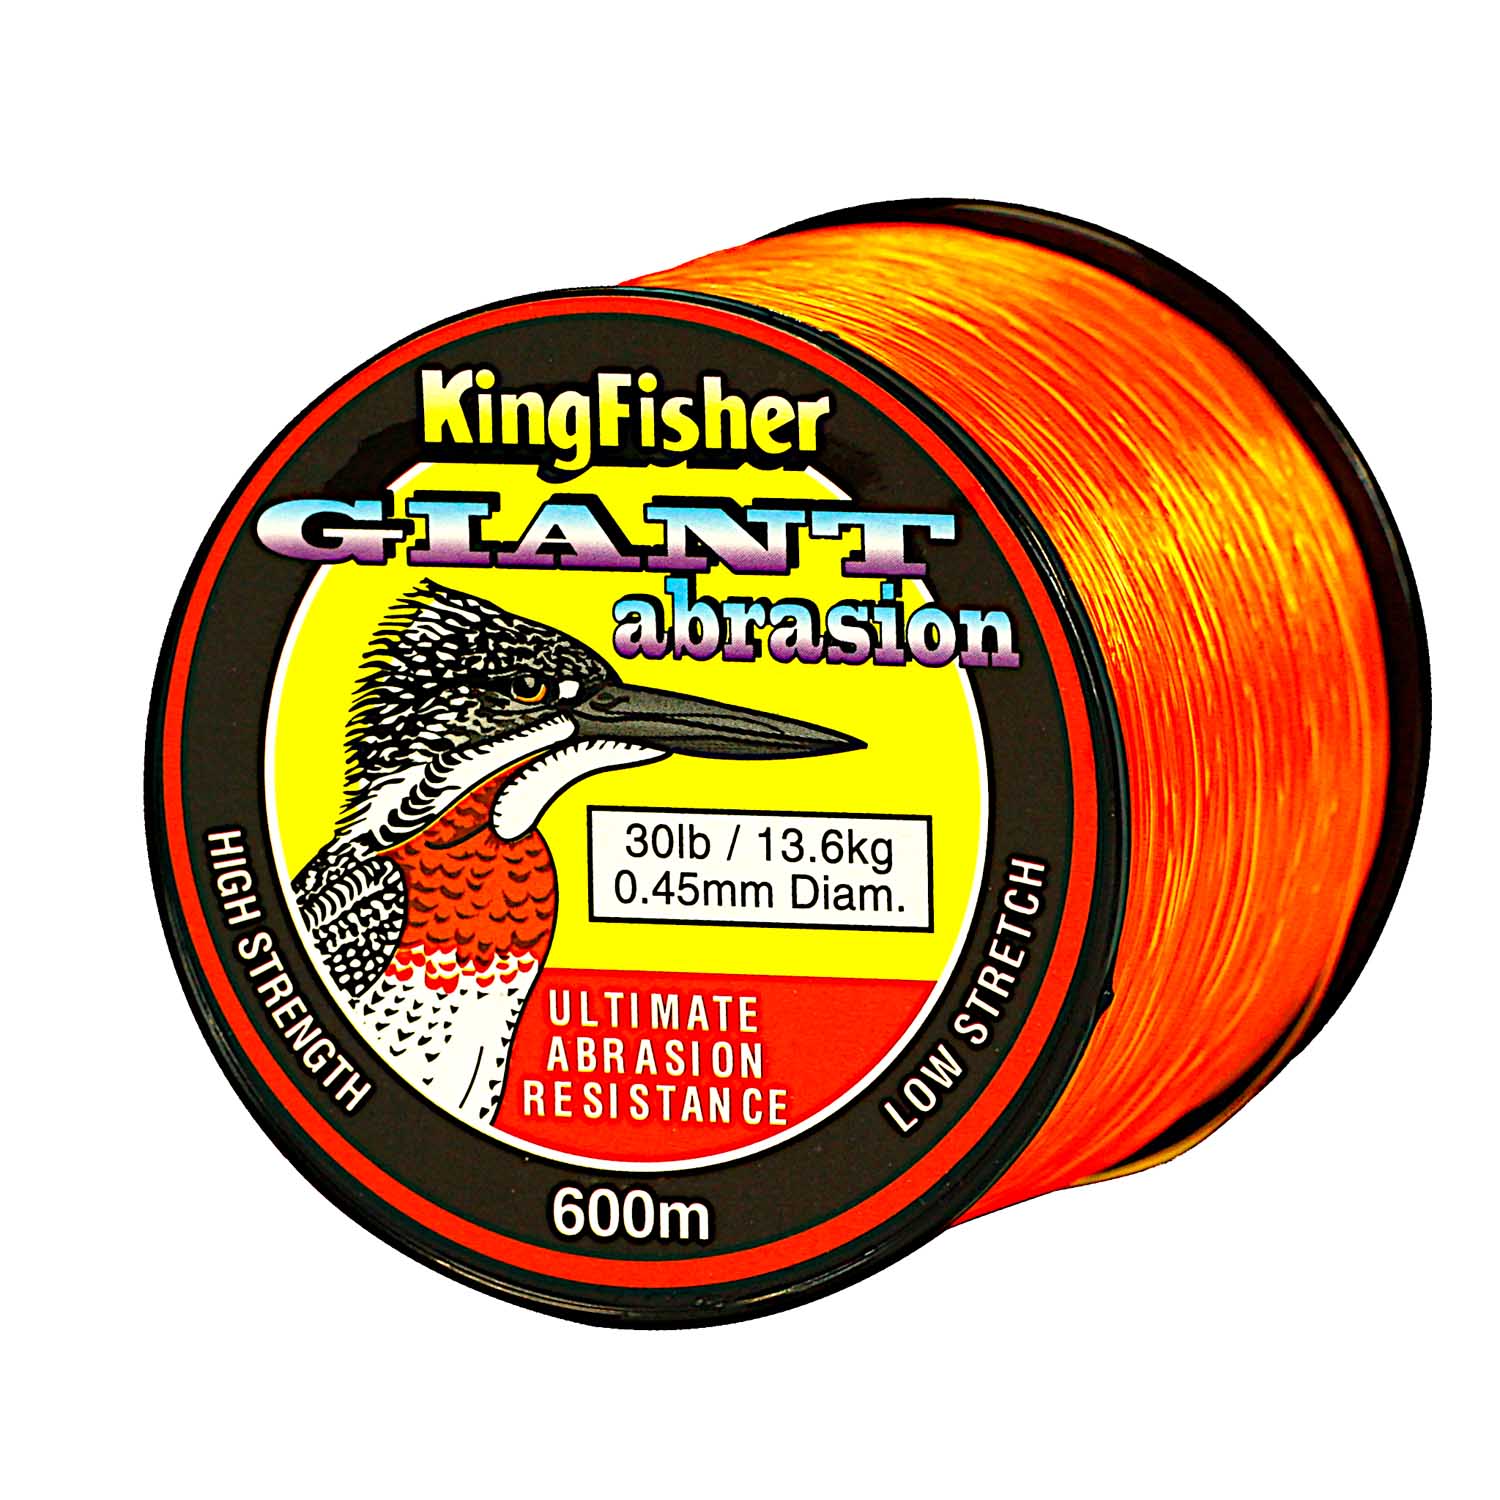 Kingfisher Giant Abrasion Nylon Fishing Line .45MM, 13.6KG/30LB